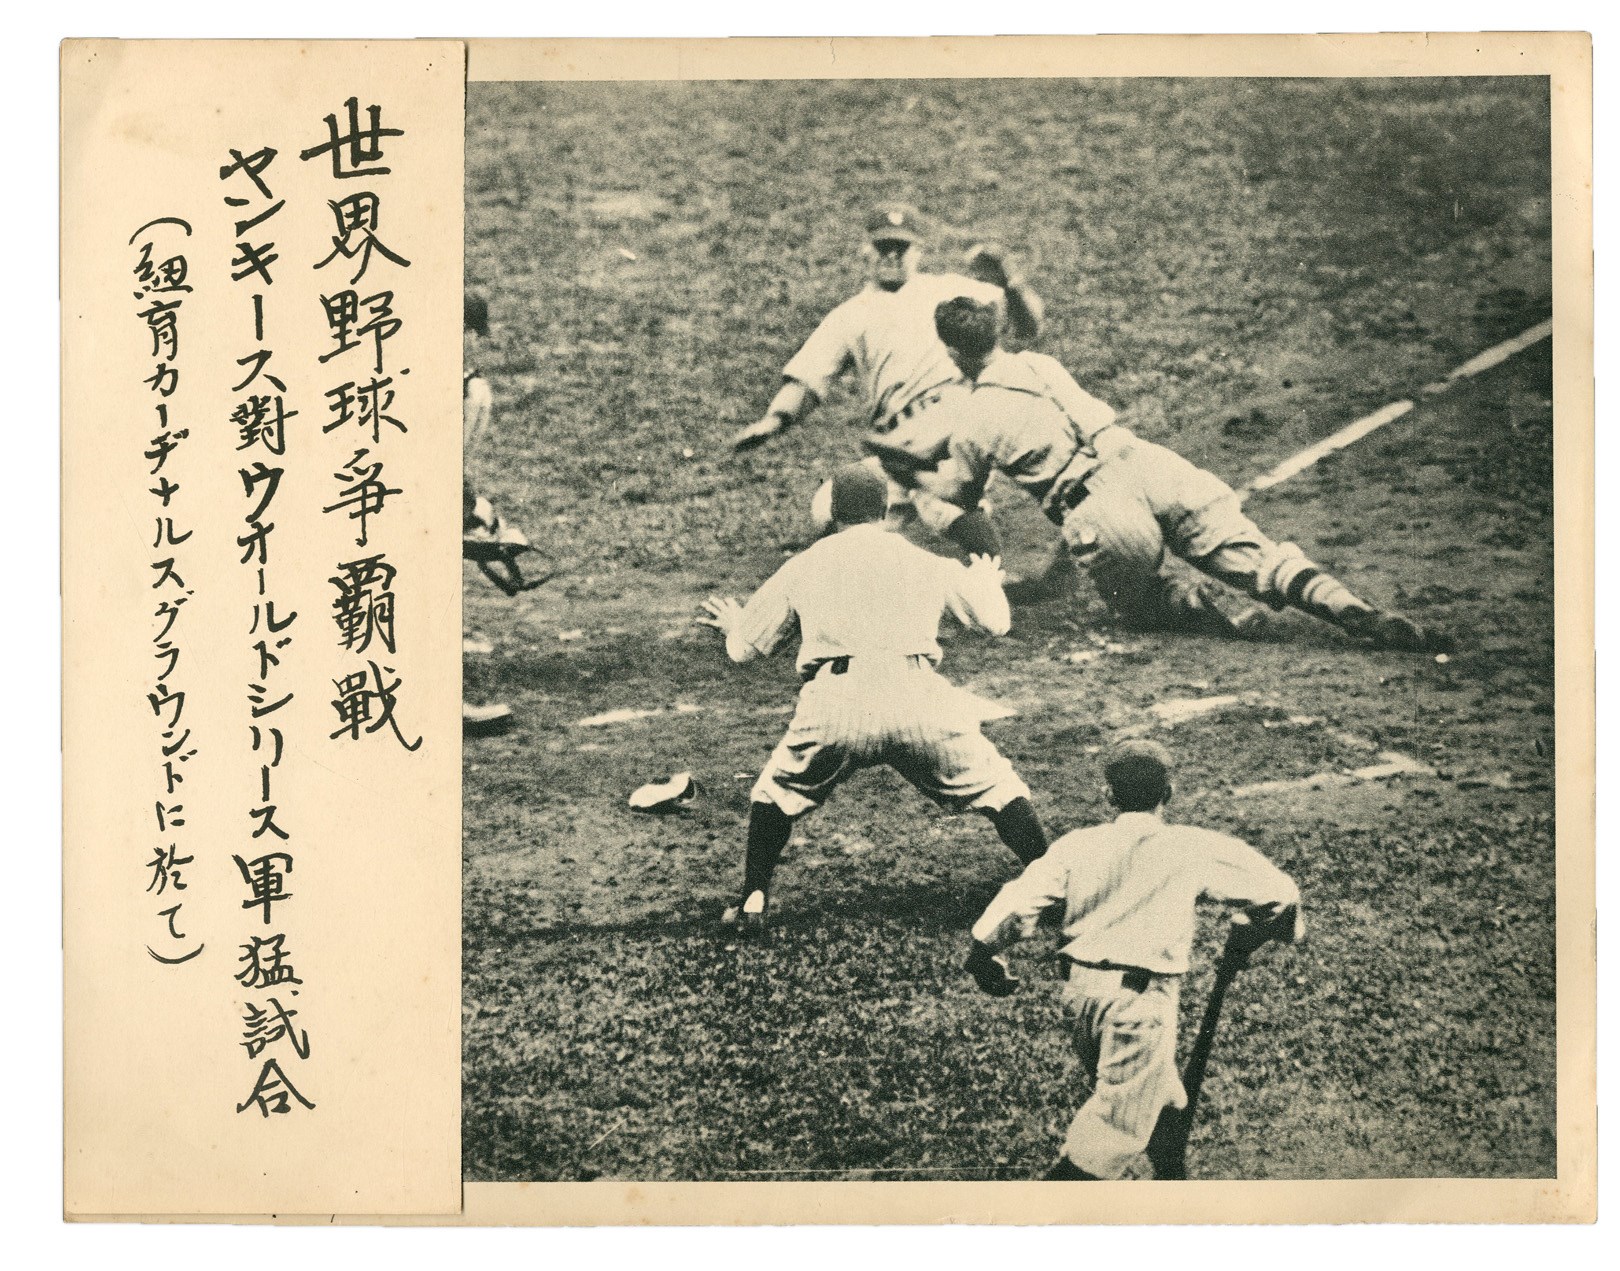 Negro League, Latin, Japanese & International Base - 1926 World Series Advertising Poster